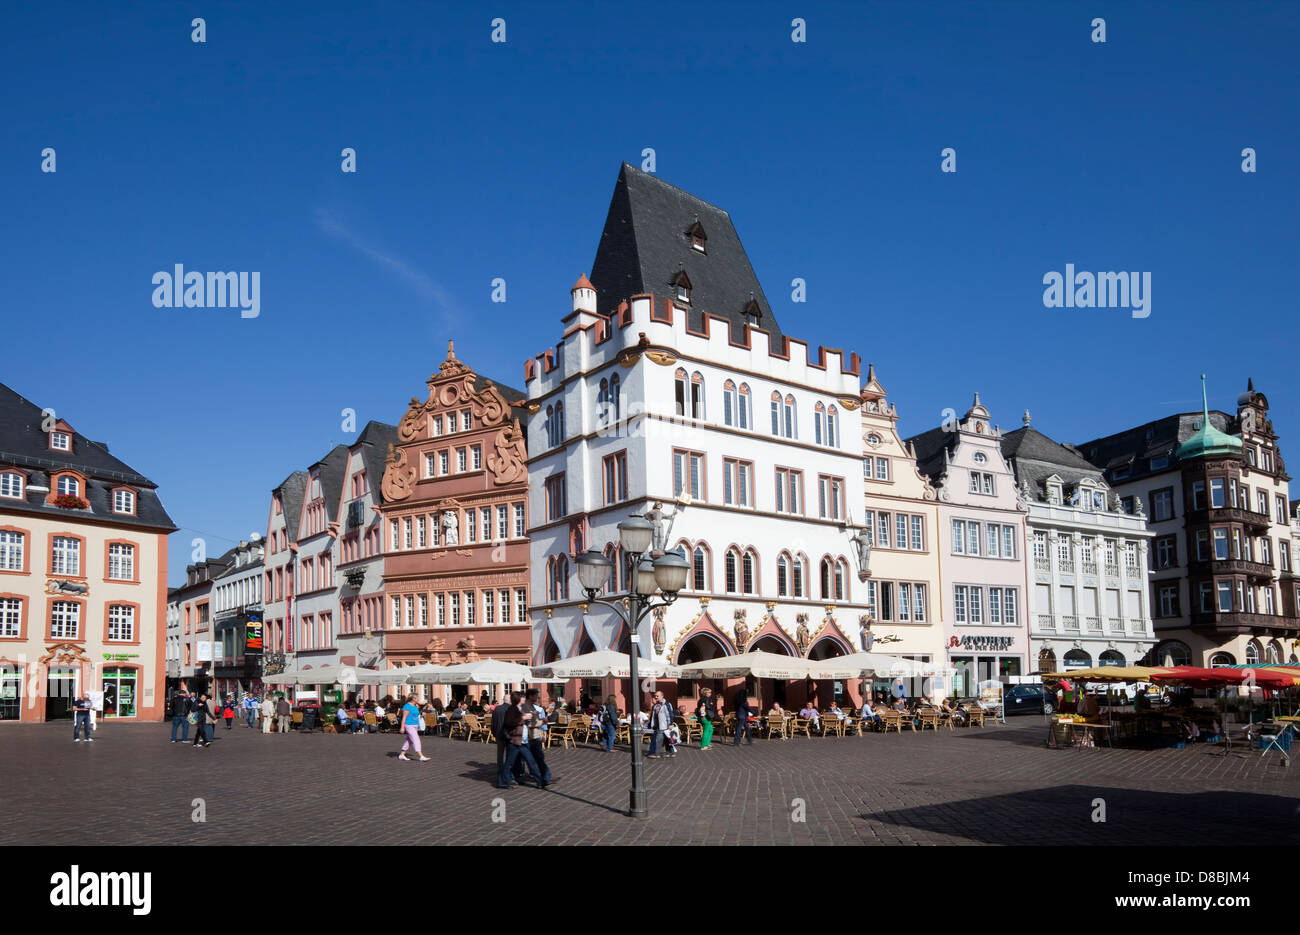 The medieval market place on Hauptmarkt square, Steipe, Trier, Rhineland-Palatinate, Germany, Europe Stock Photo